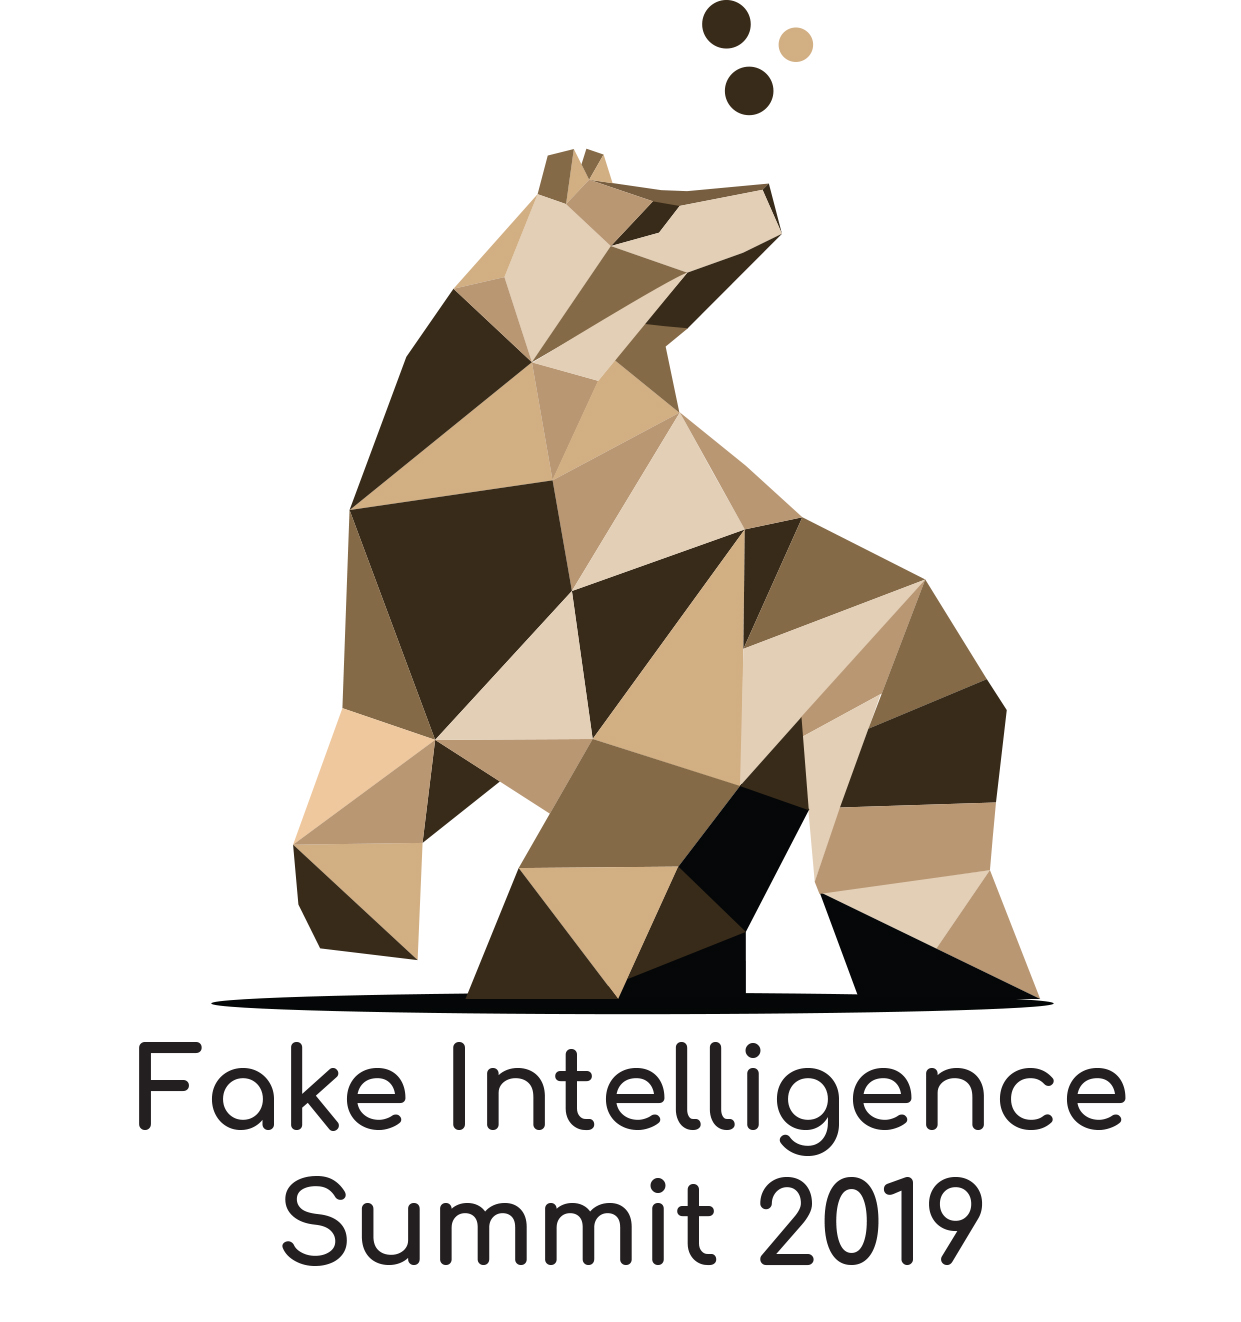 Fake Intelligence Online Summit 2019